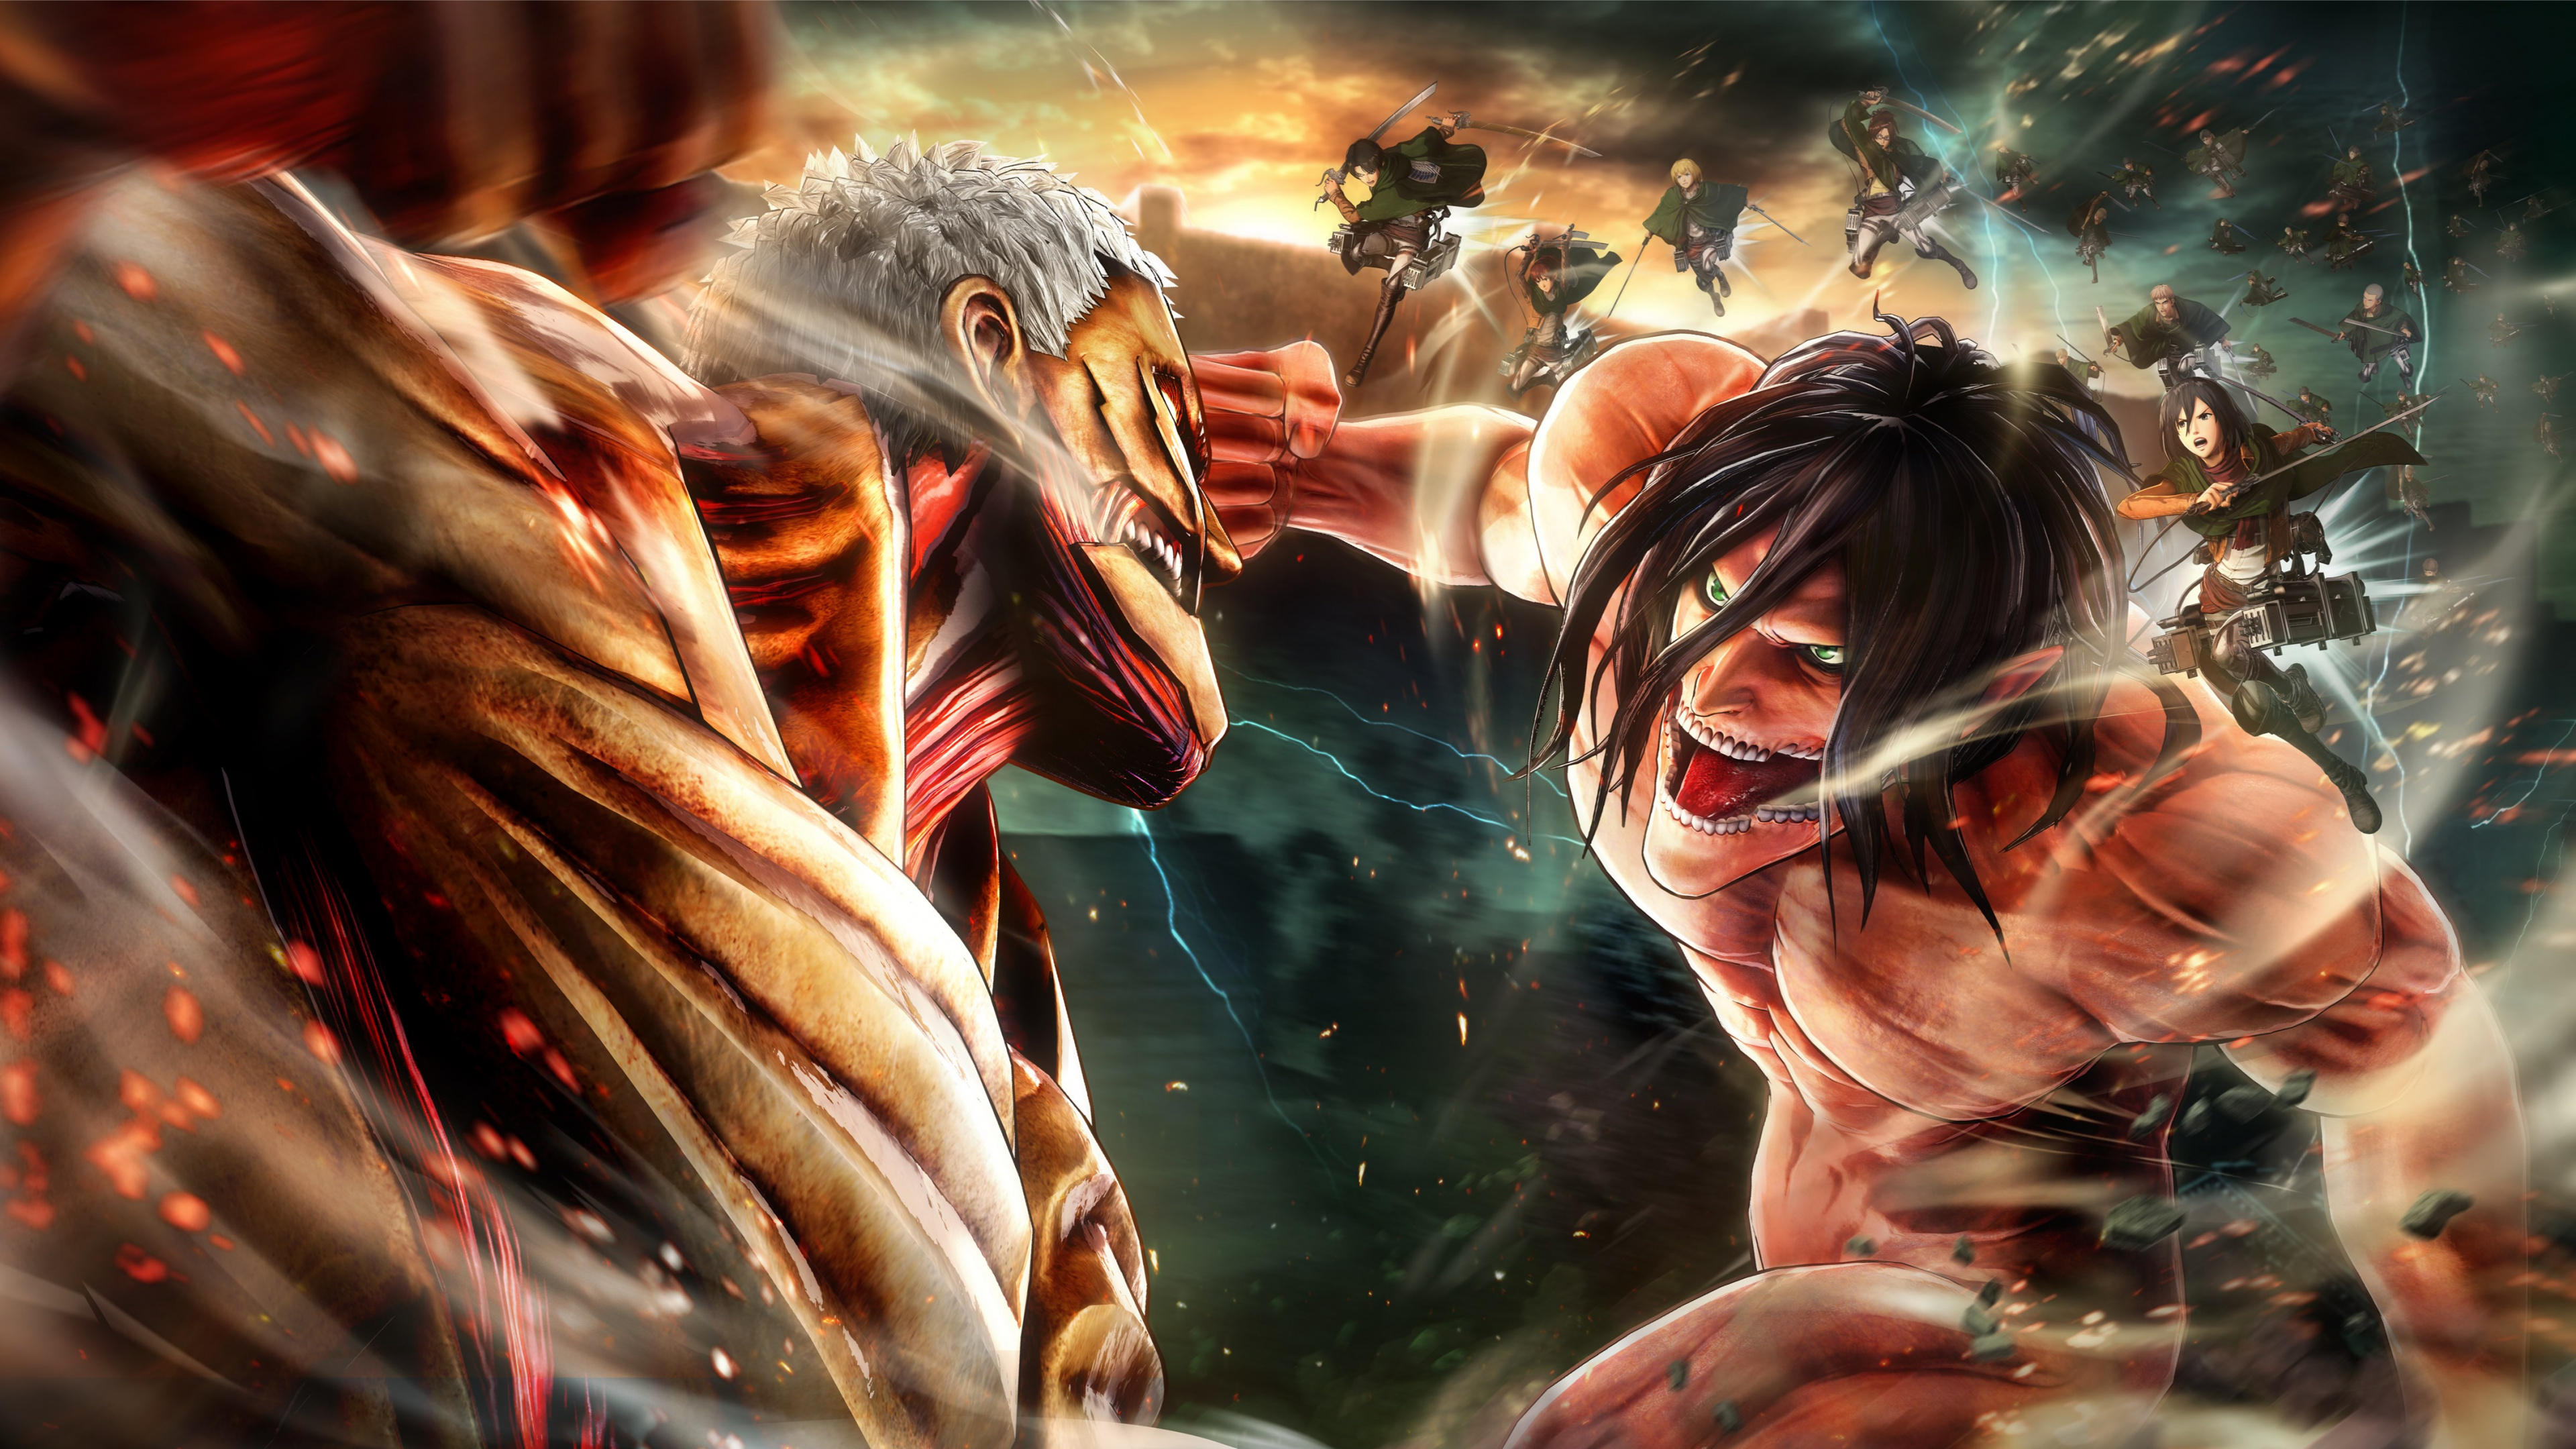 Обои Attack on Titan 2, нападение на титан, koei и tecmo игры, мифология, аниме в разрешении 3840x2160